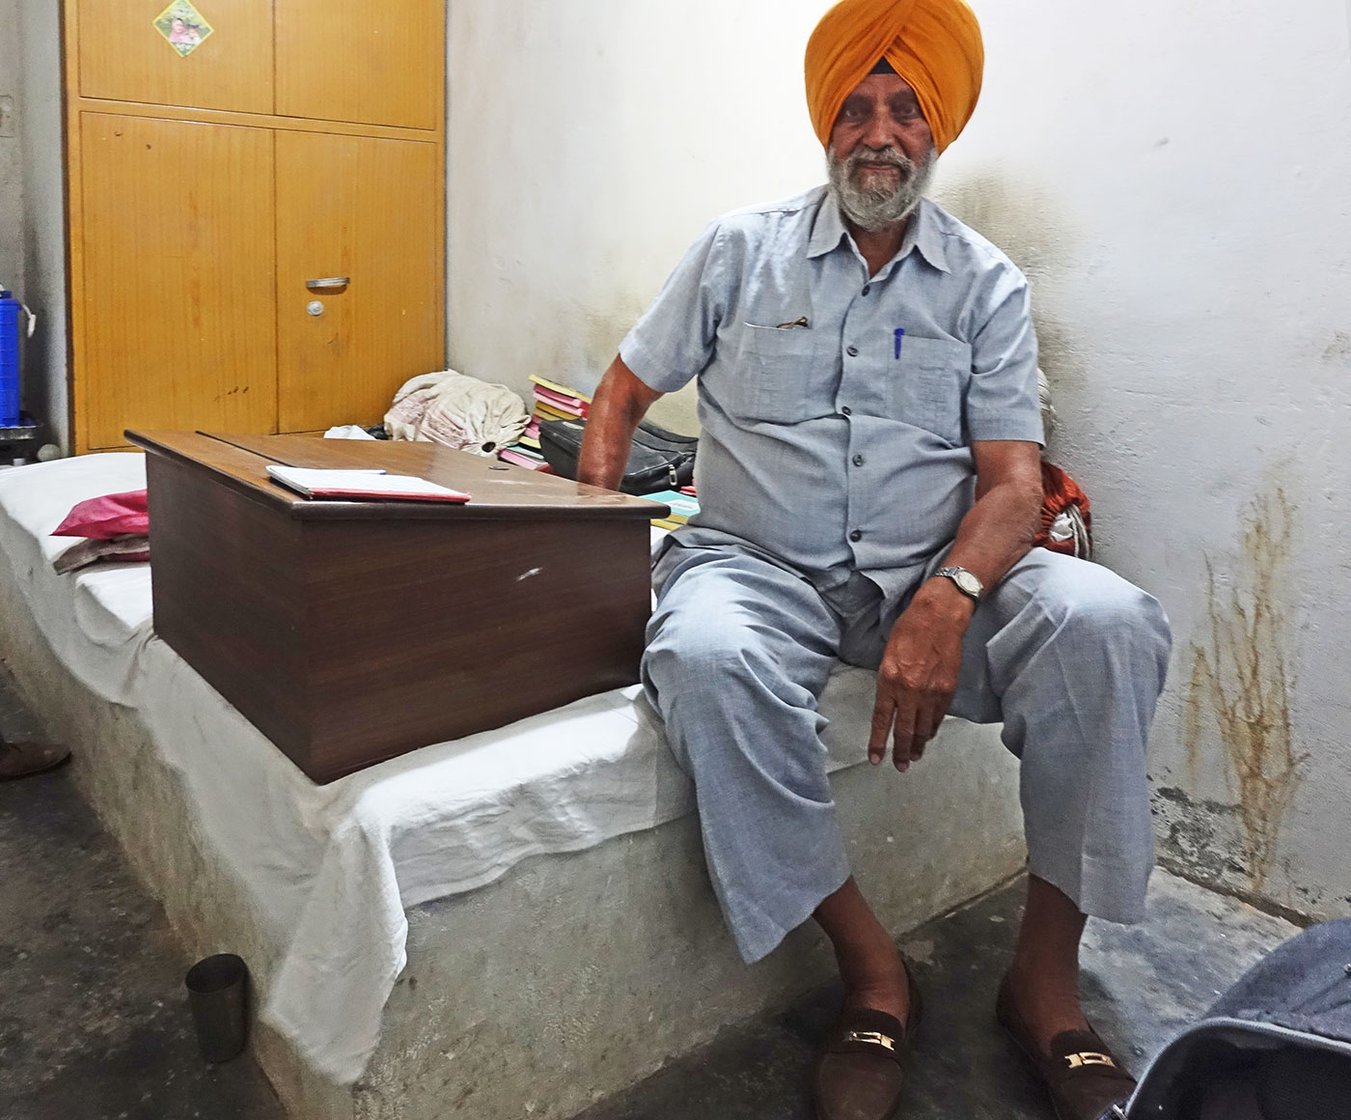 A man sitting on a bed in an orange turban